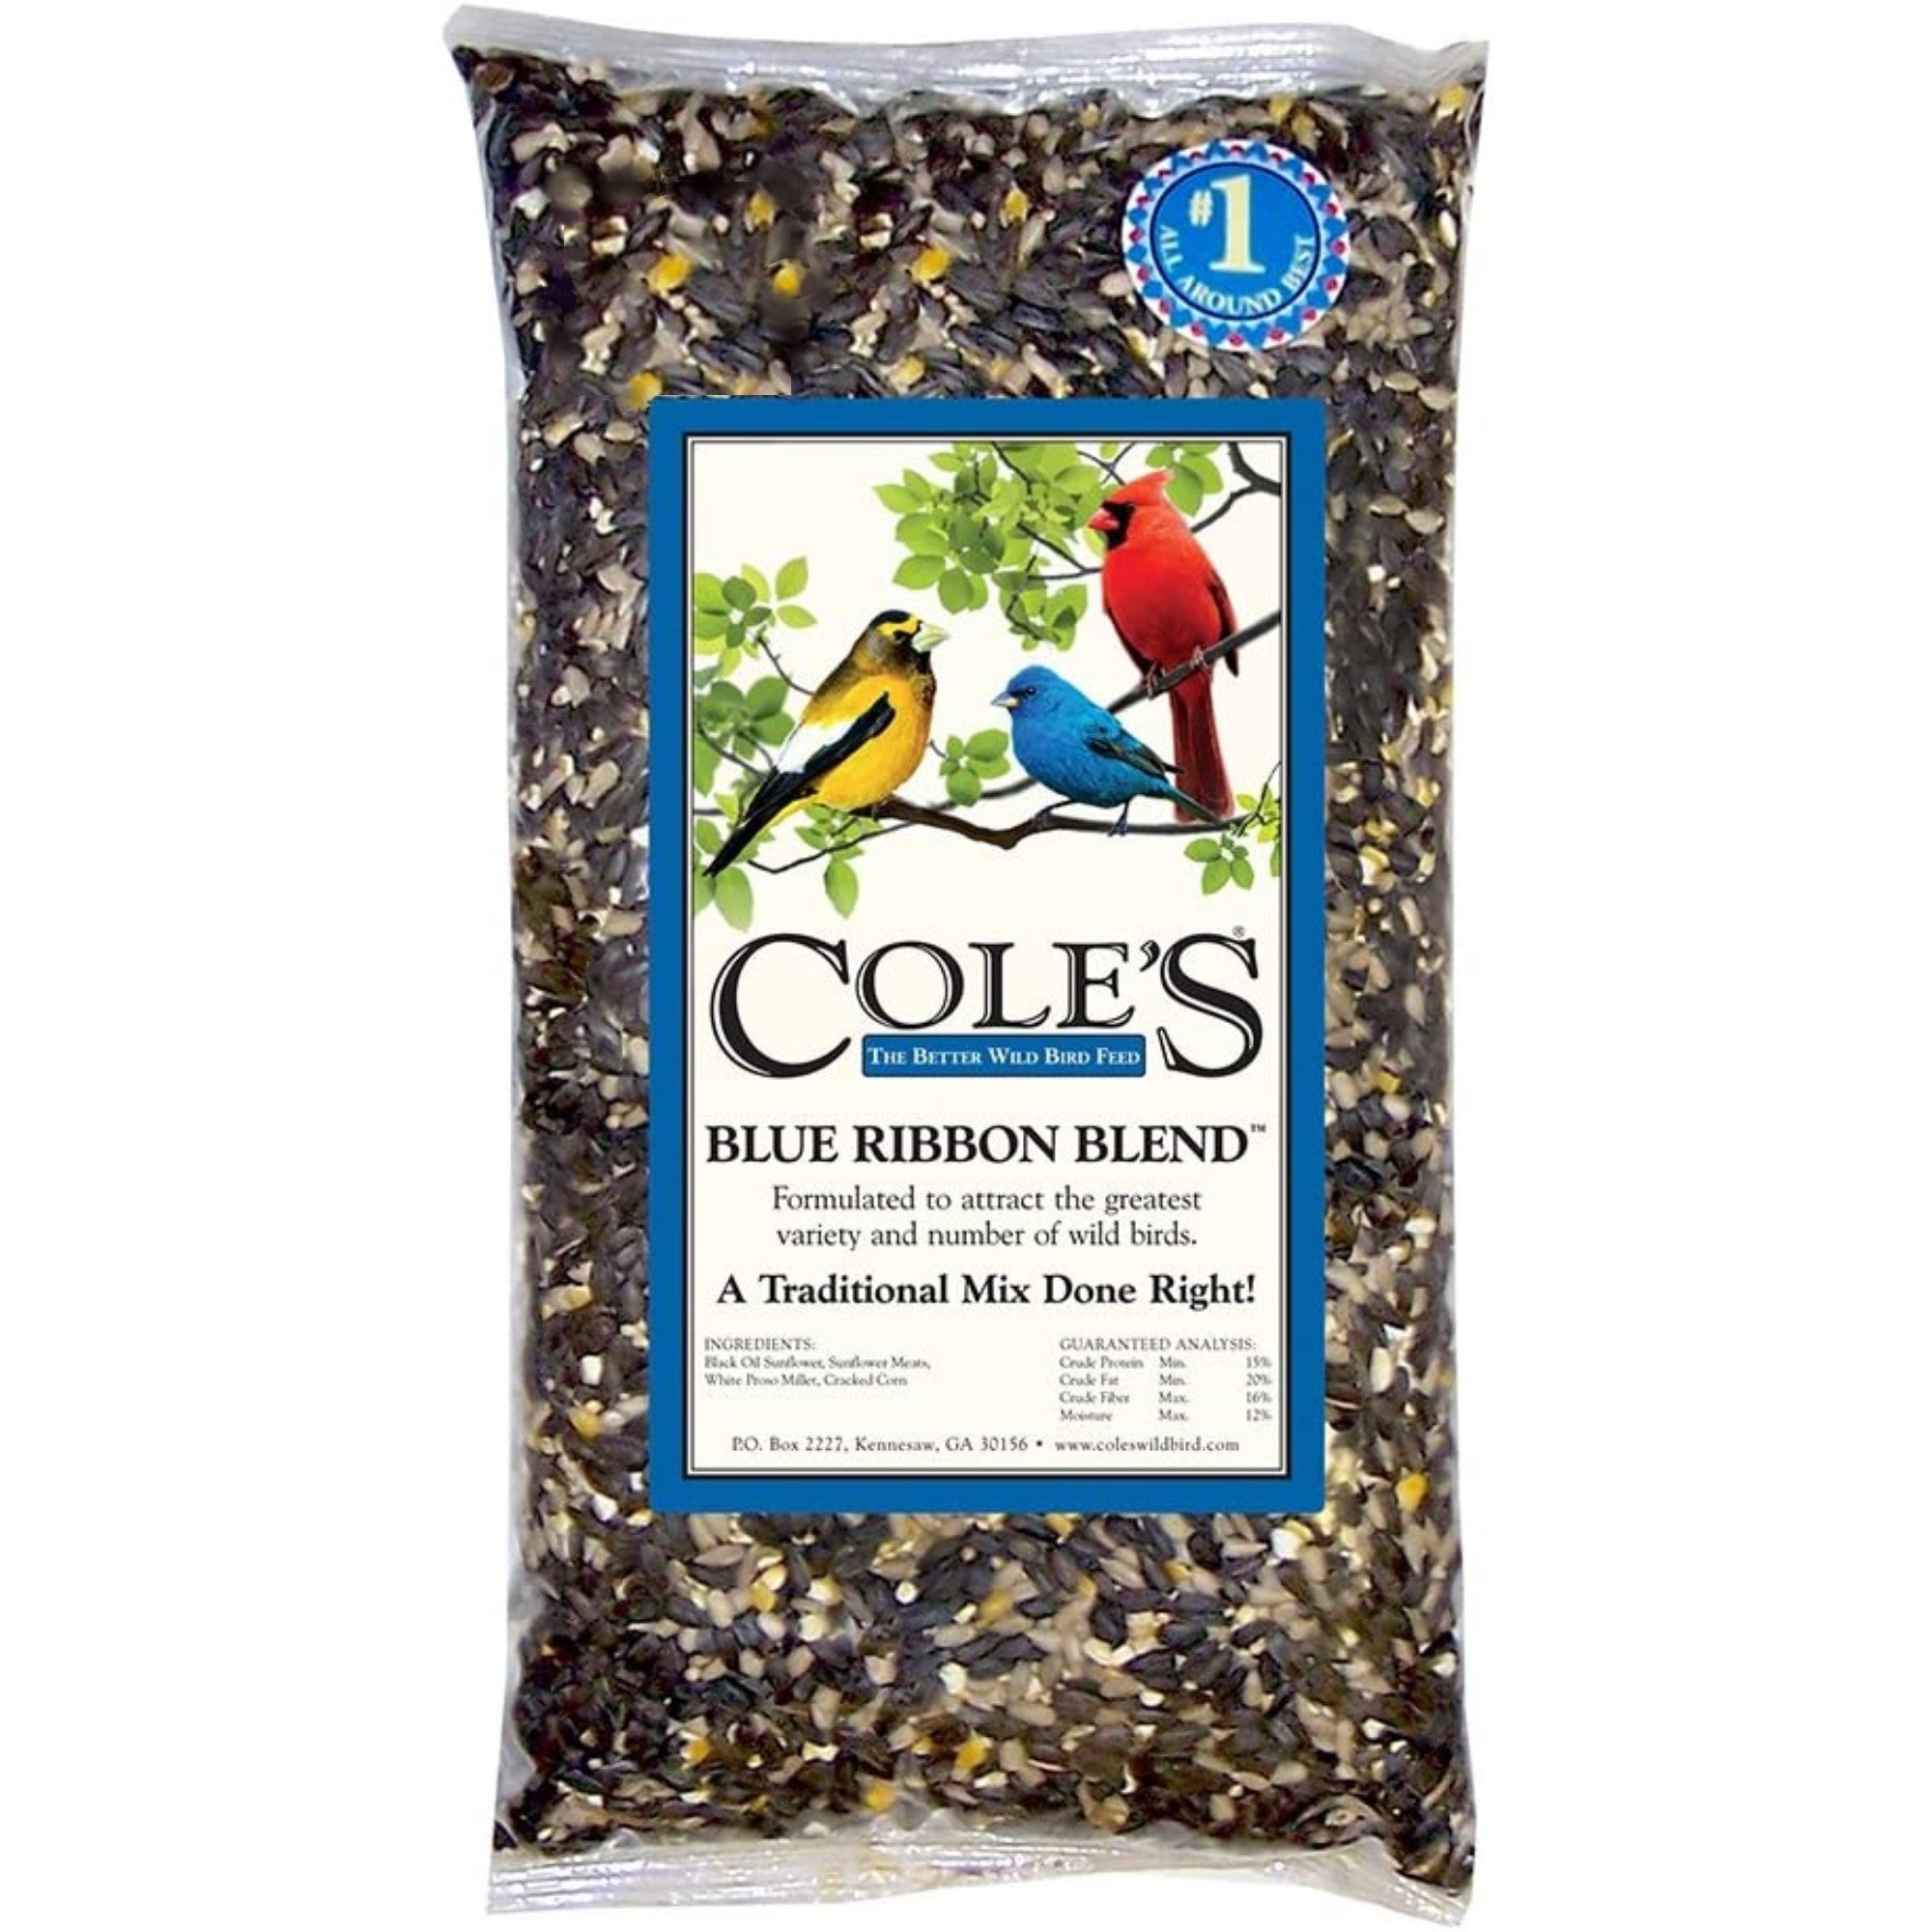 Cole's Blue Ribbon Blend Wild Bird Seed